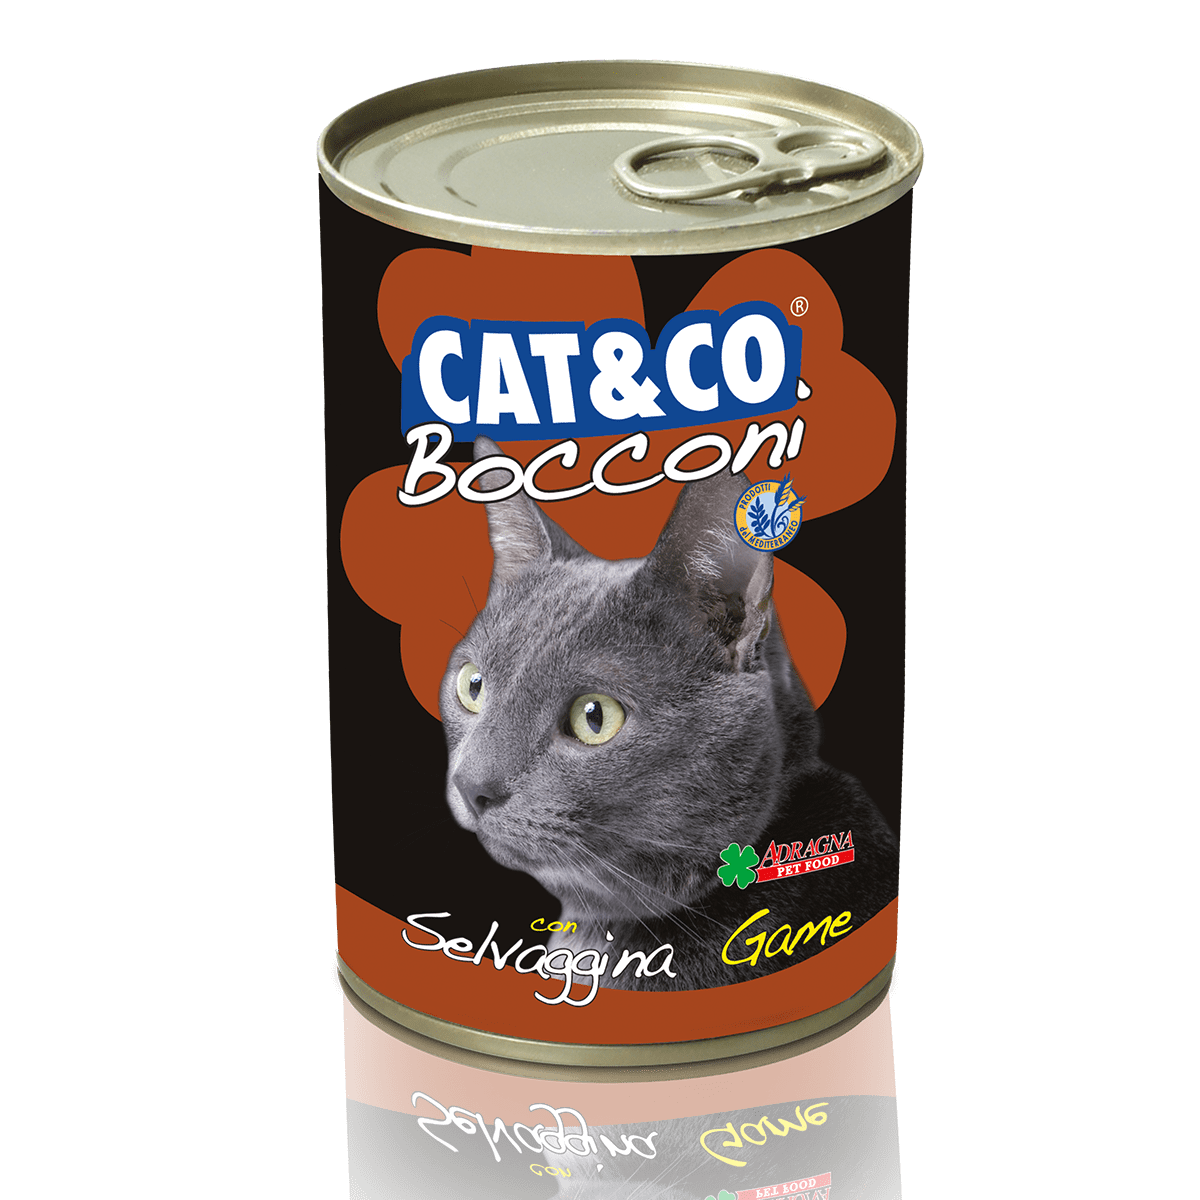 Cat&Co Bocconi Jeu